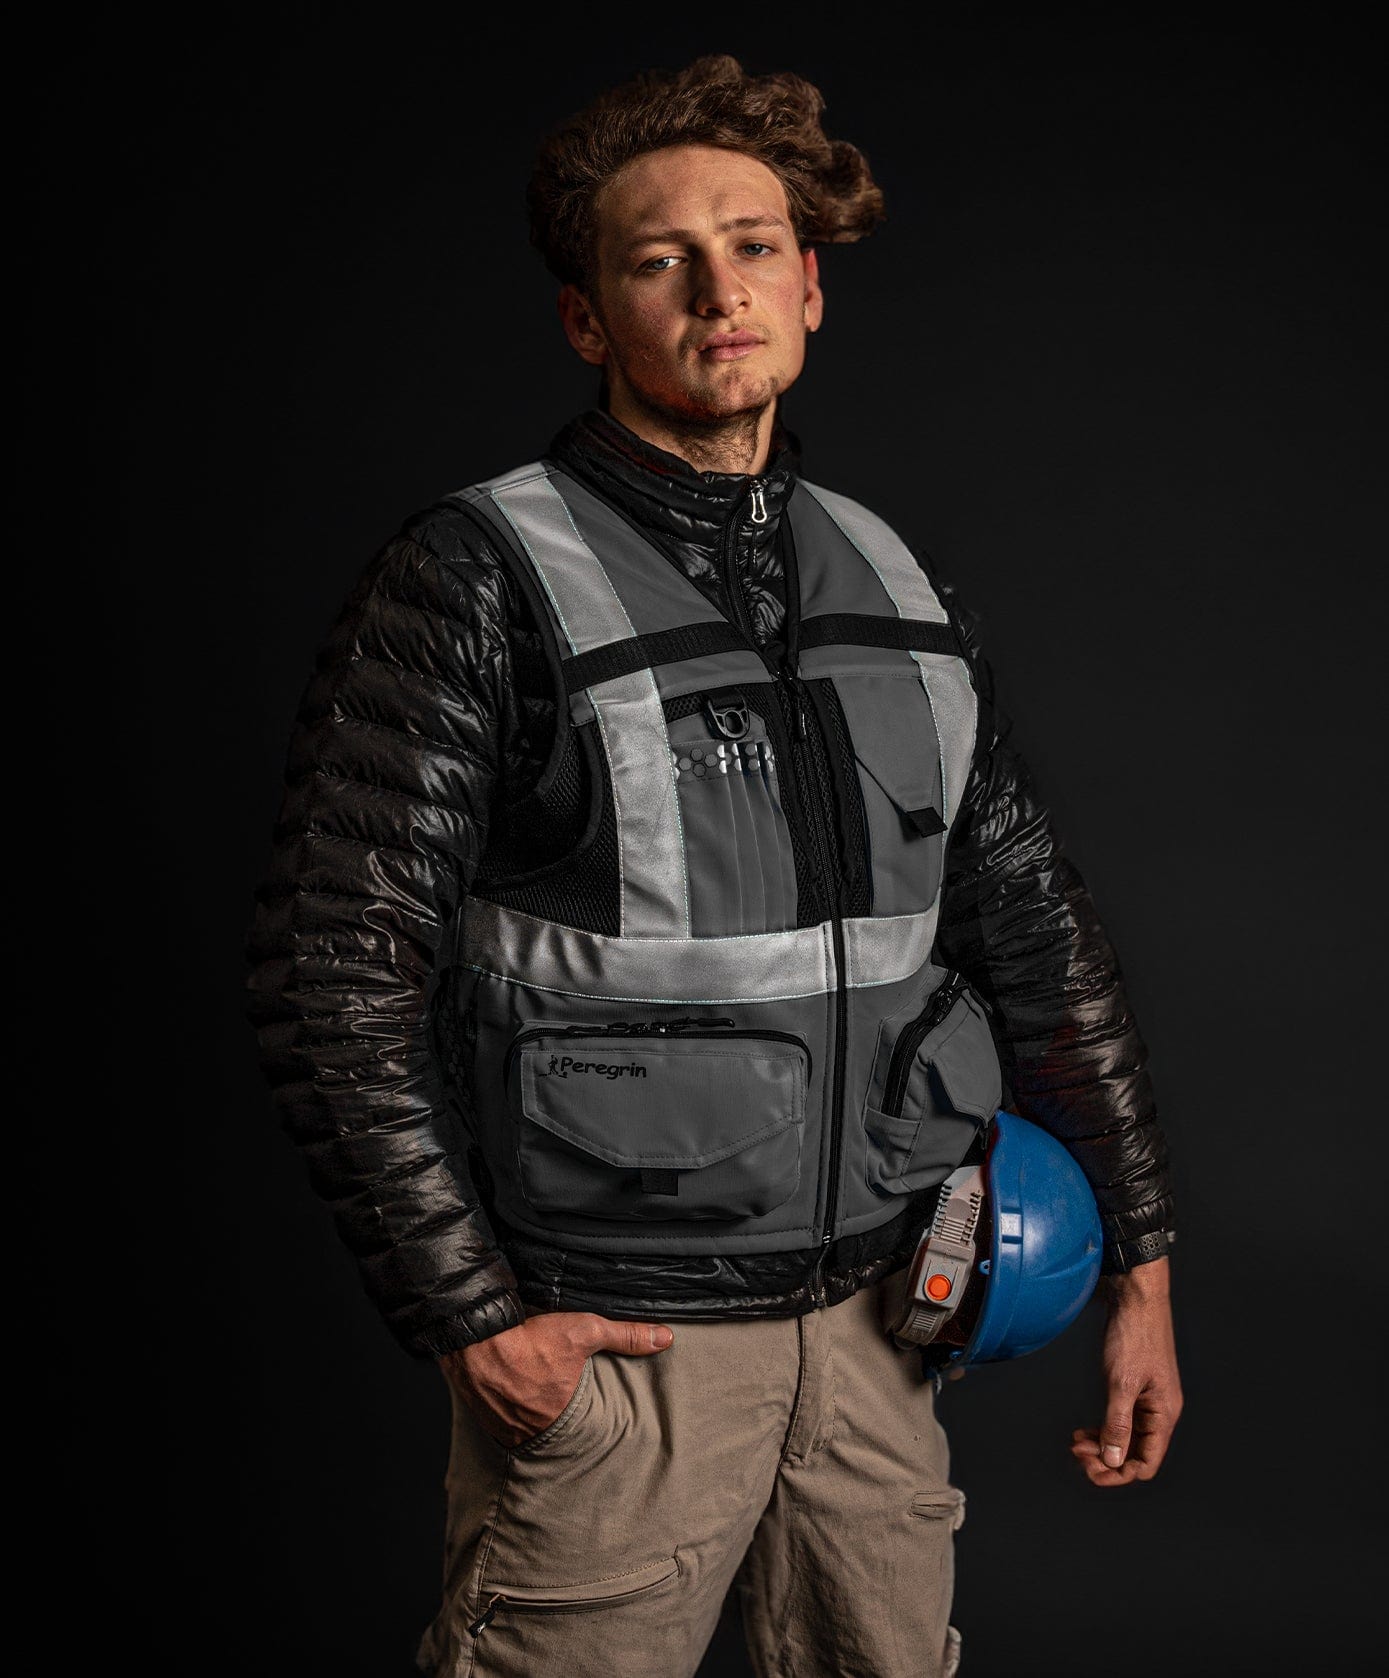 Peregrin Reflective Safety Vest N1 Blue